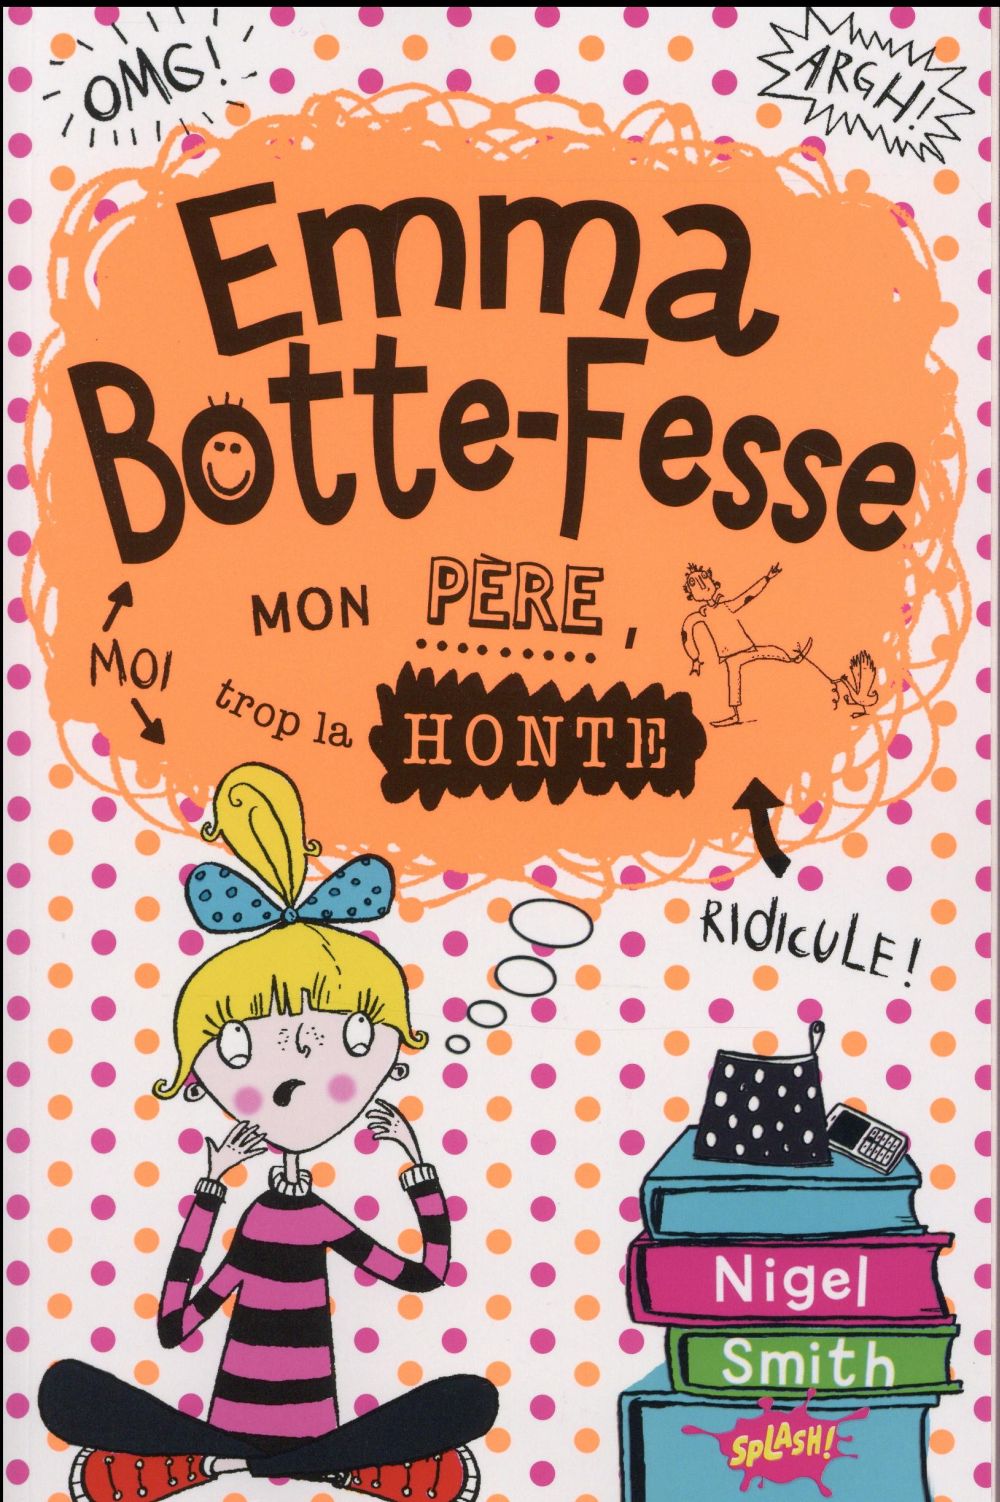 EMMA BOTTE-FESSE - MON PERE, TROP LA HONTE